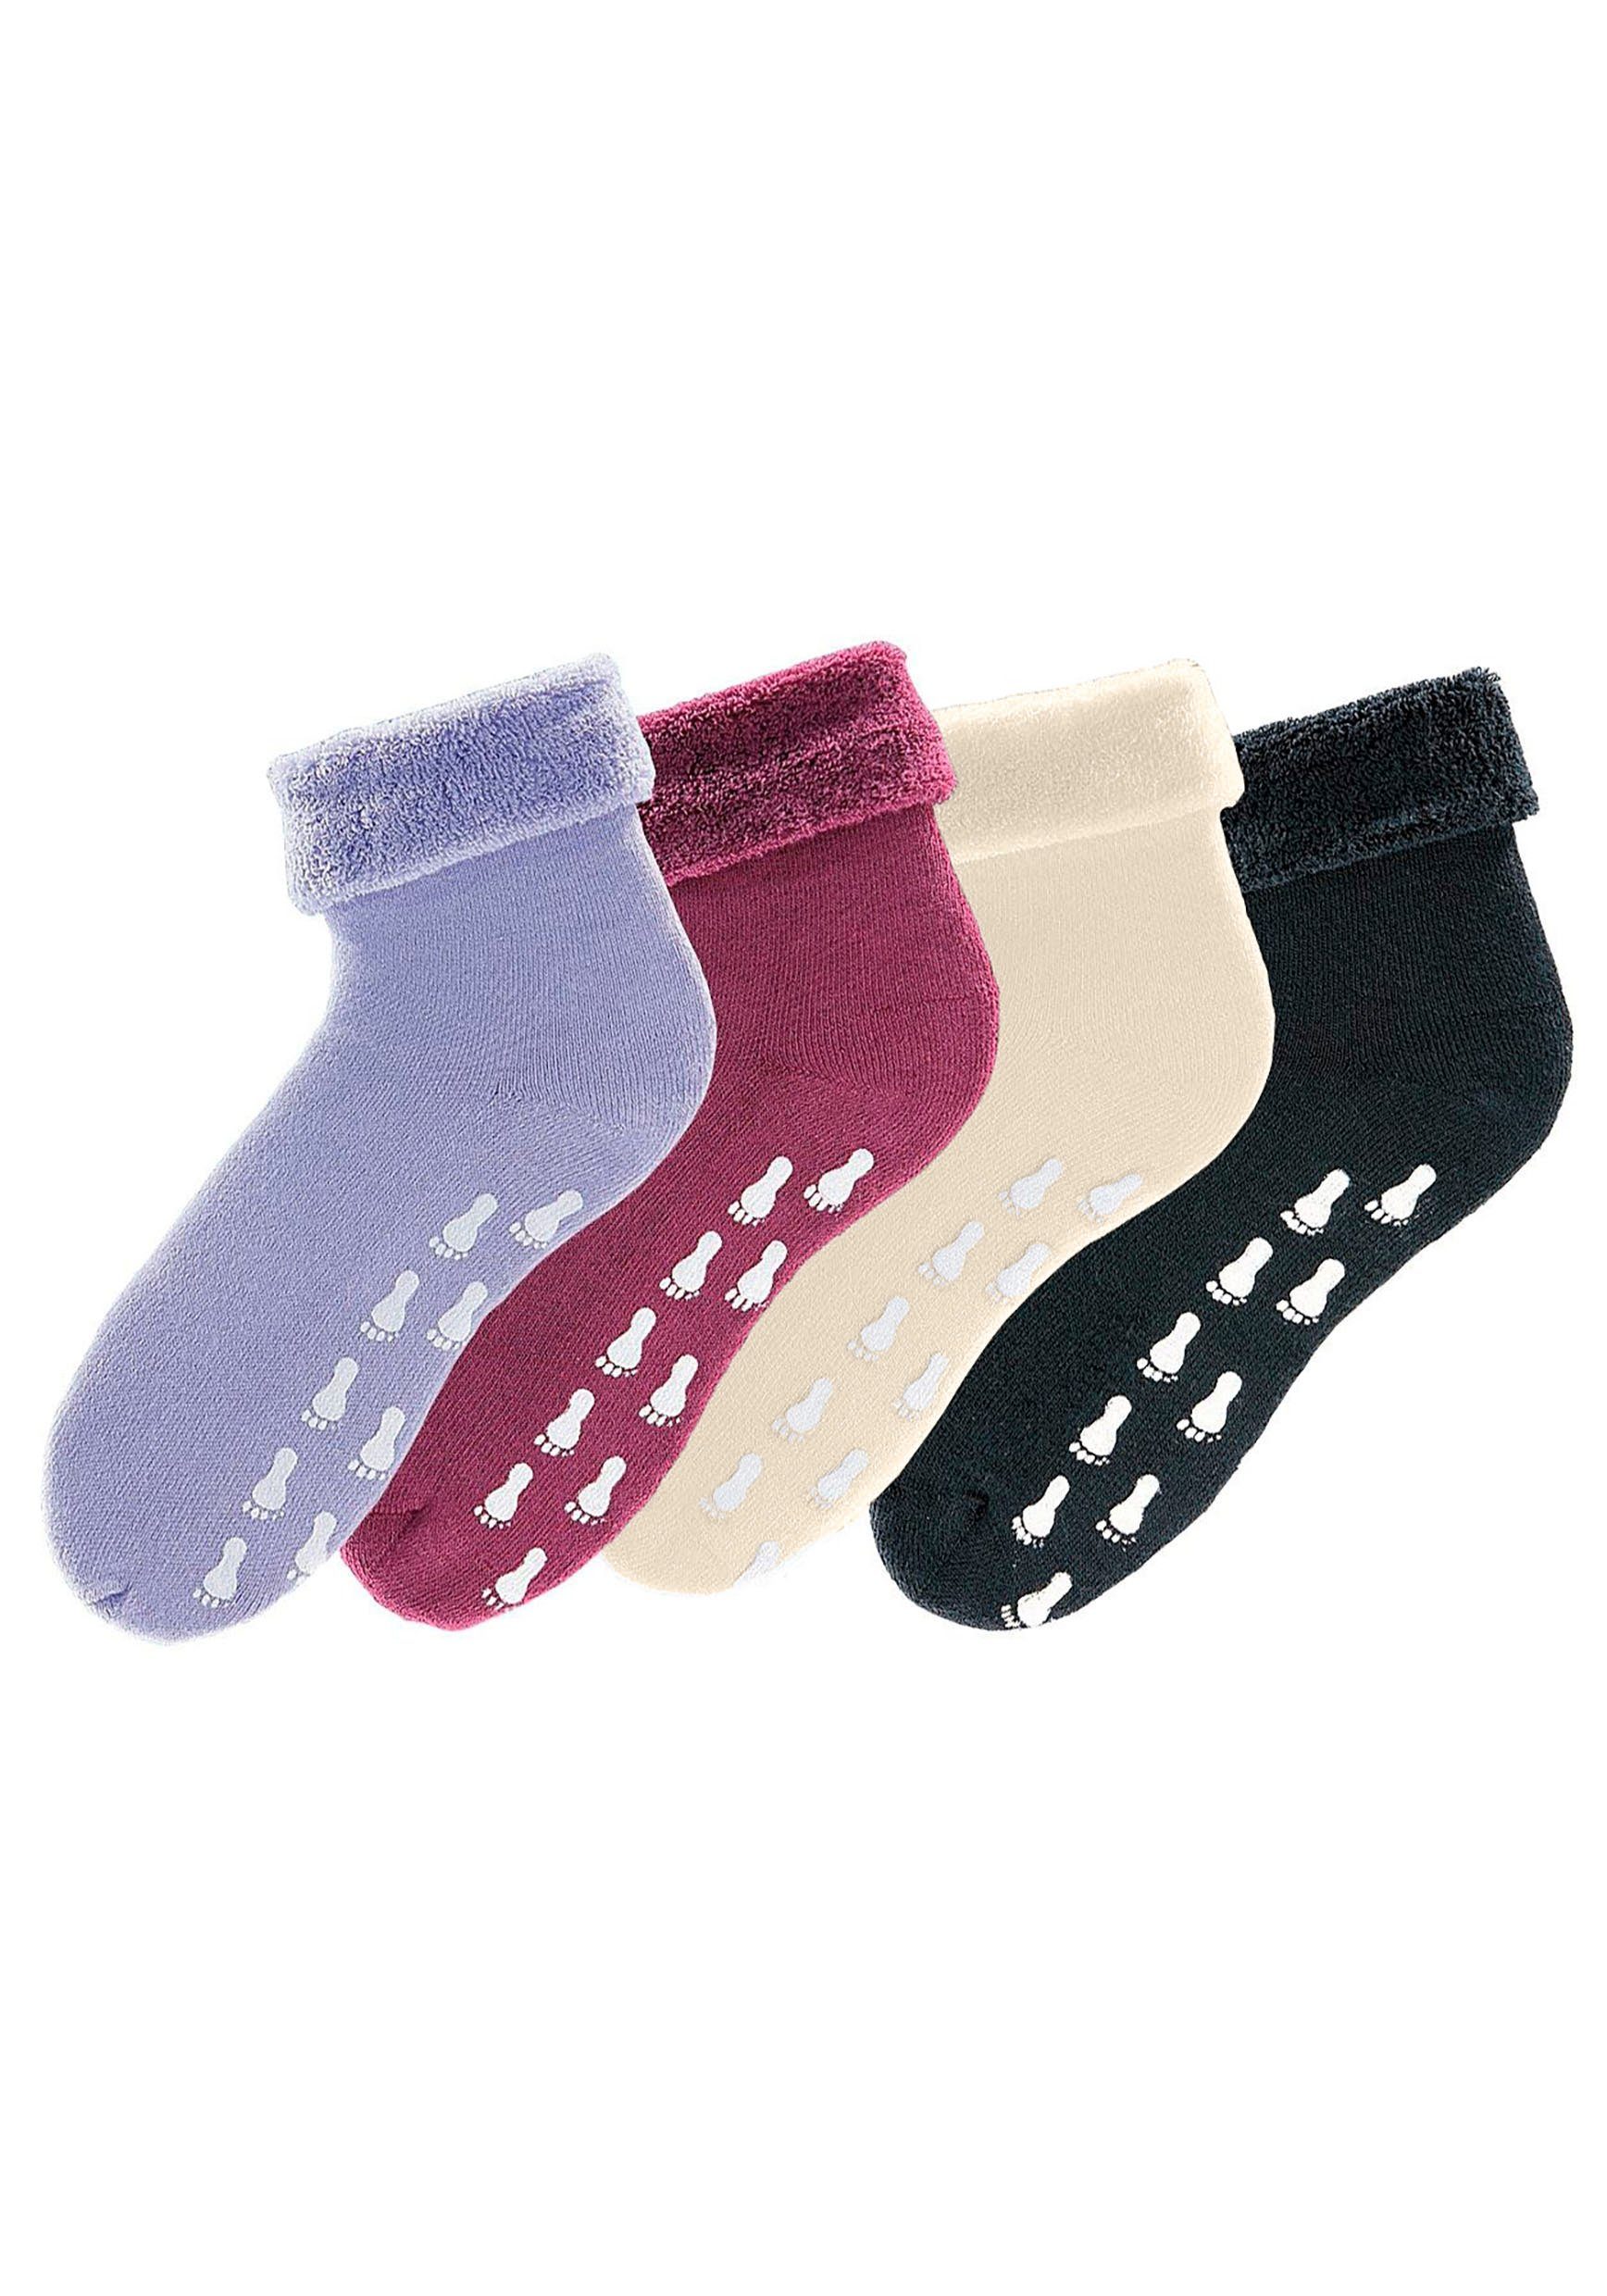 Go in ABS-Socken (Set, 4-Paar) Vollfrottee bunt und mit Antirutschsohle